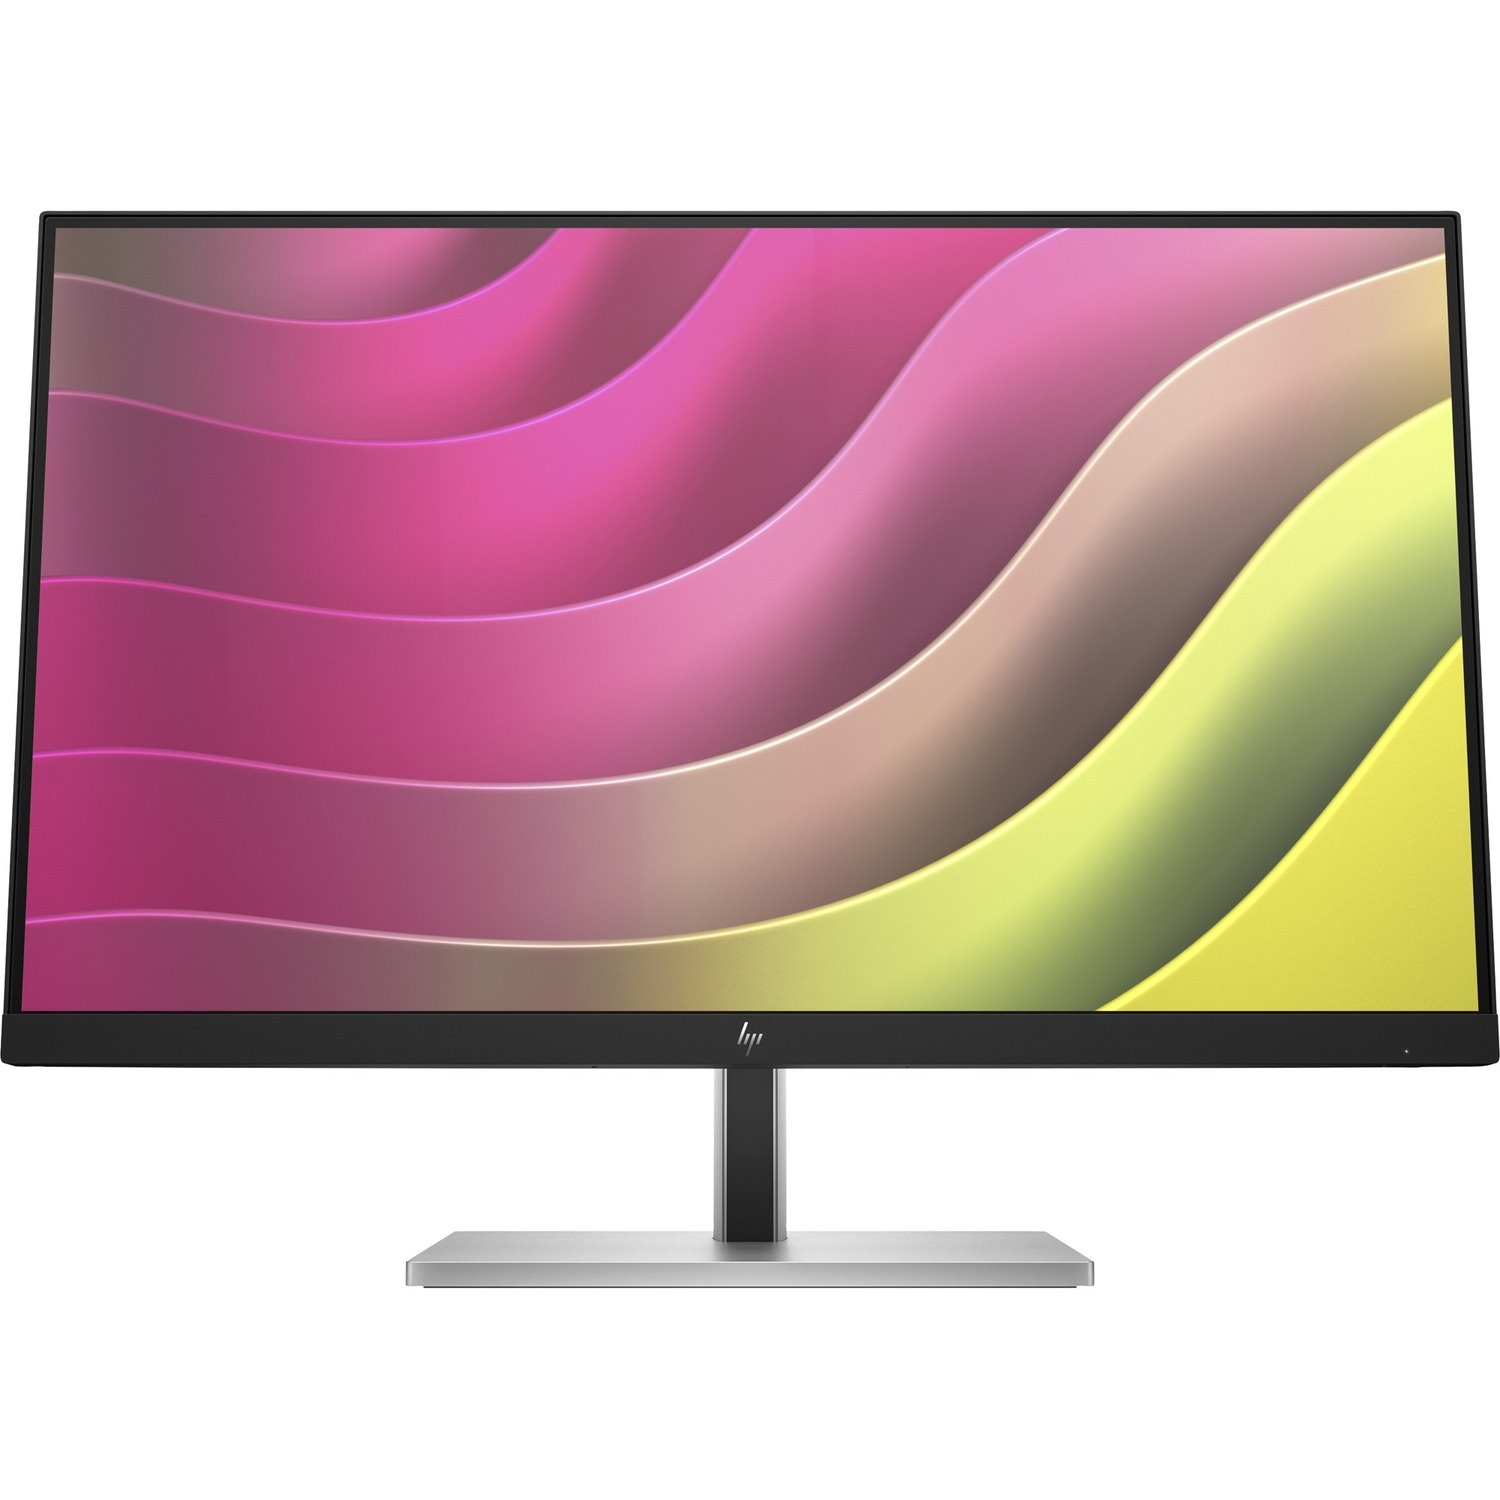 HP E24t G5 23.8" LCD Touchscreen Monitor - 16:9 - 5 ms GTG (OD)